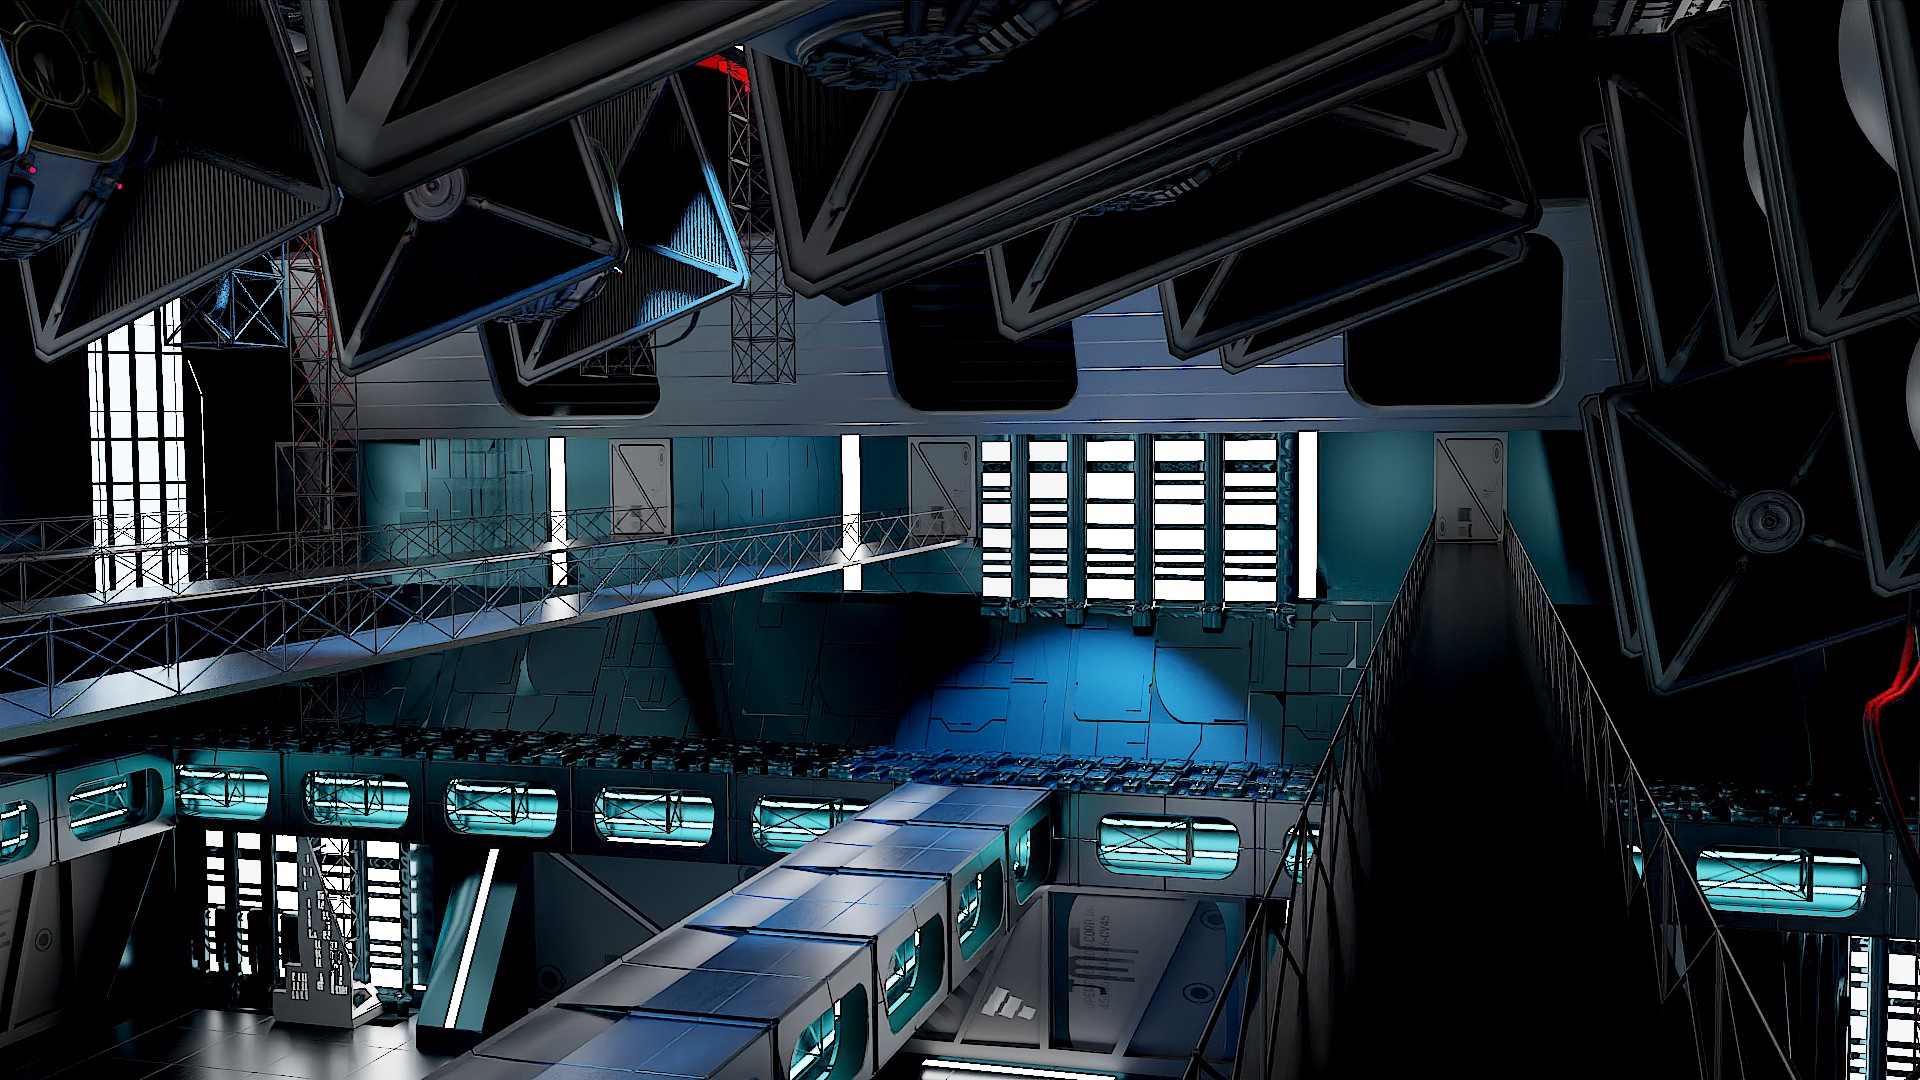 star wars hangar preview image 2